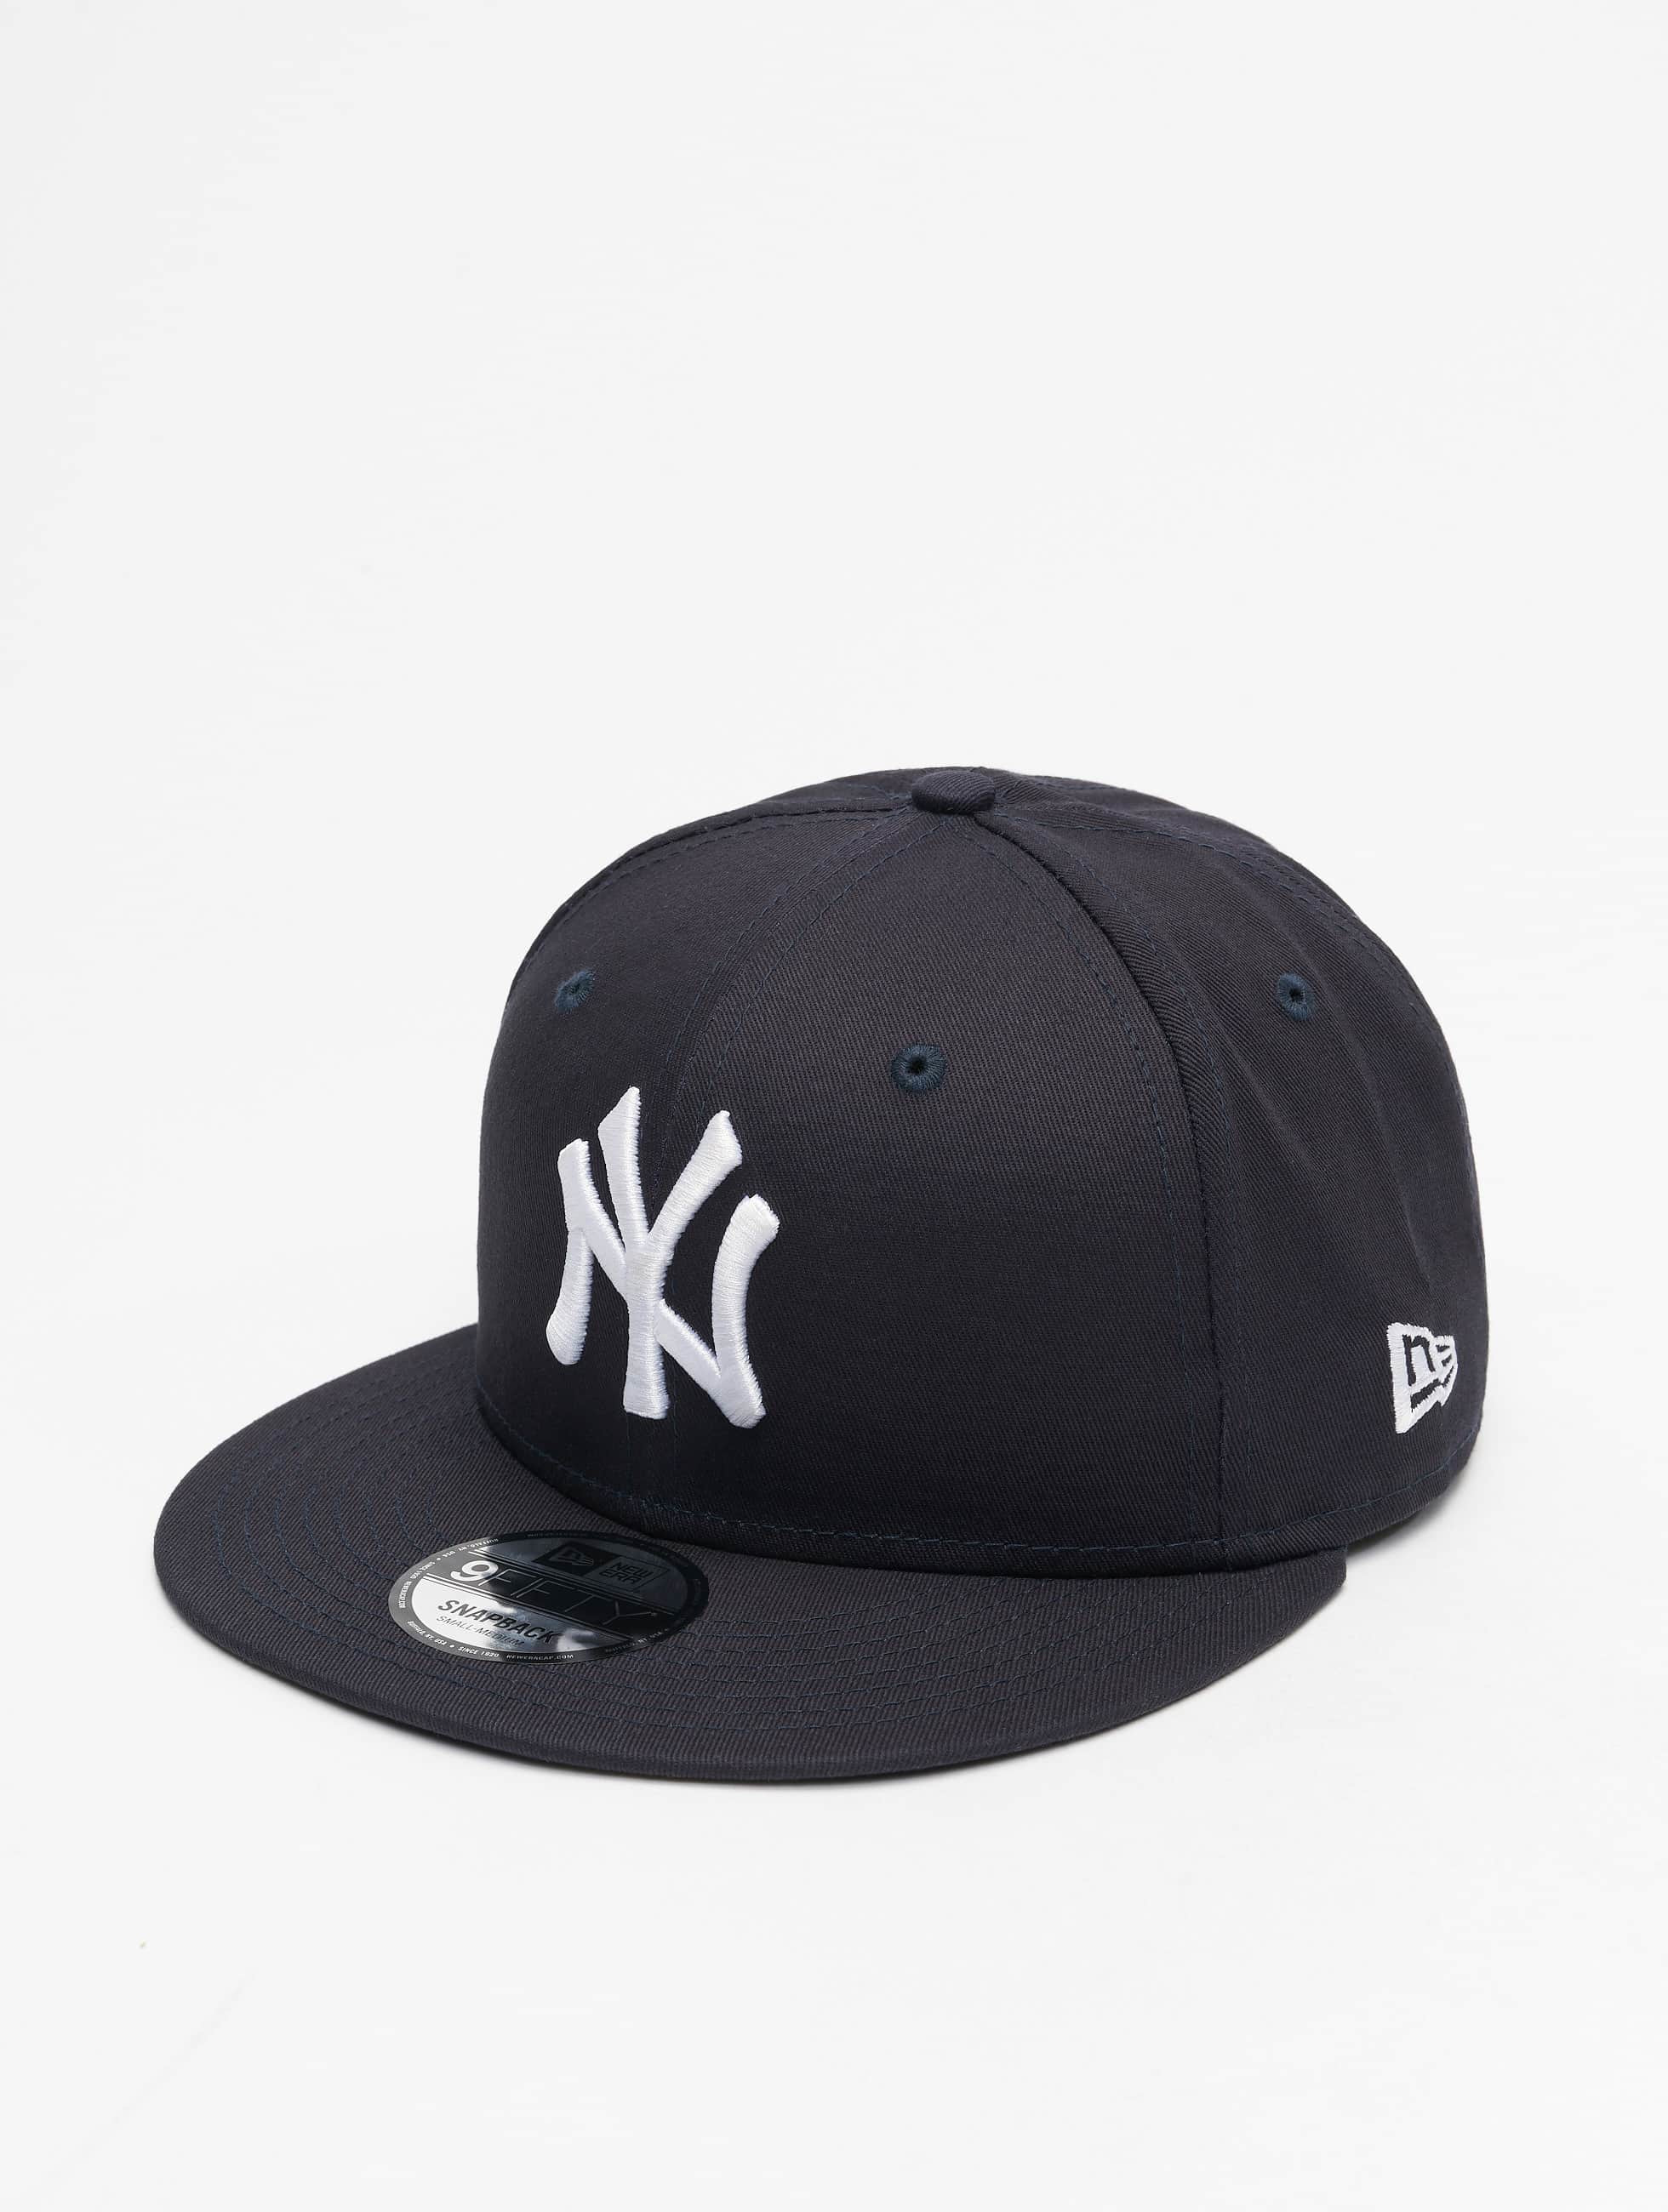 Alsjeblieft kijk Onnauwkeurig doorgaan New Era Cap / snapback cap MLB NY Yankees 9Fifty in blauw 85941